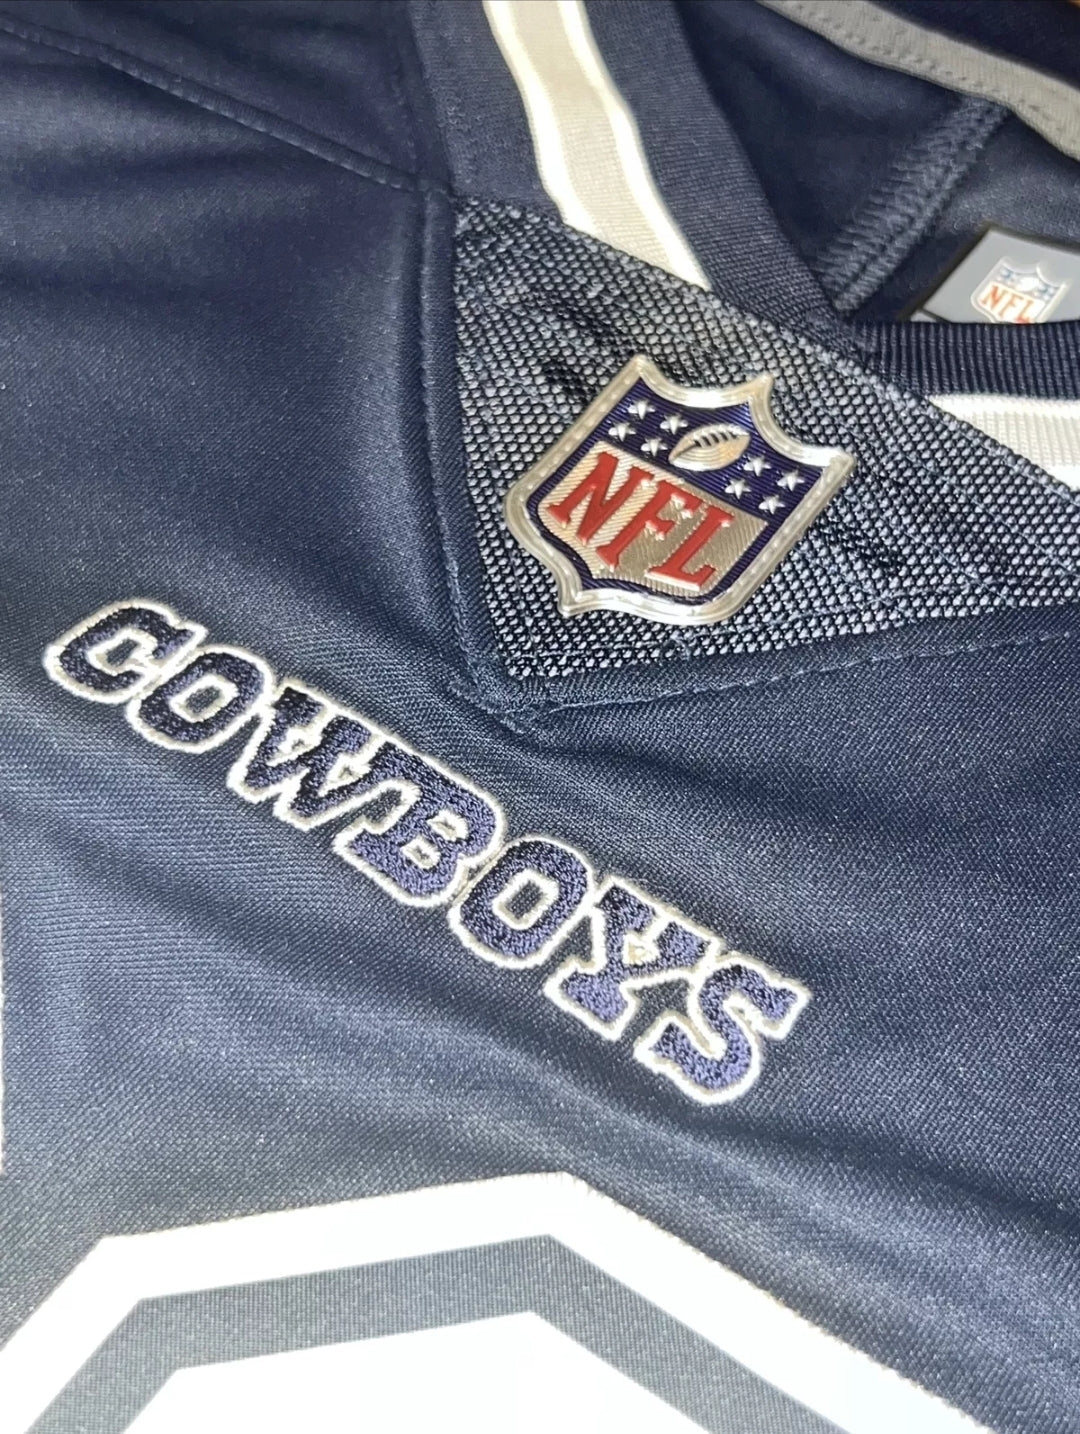 NFL *Dallas Cowboys Jersey "Dez BRYANT"#88 Navy Blue Stitched Game Jersey (3XL)